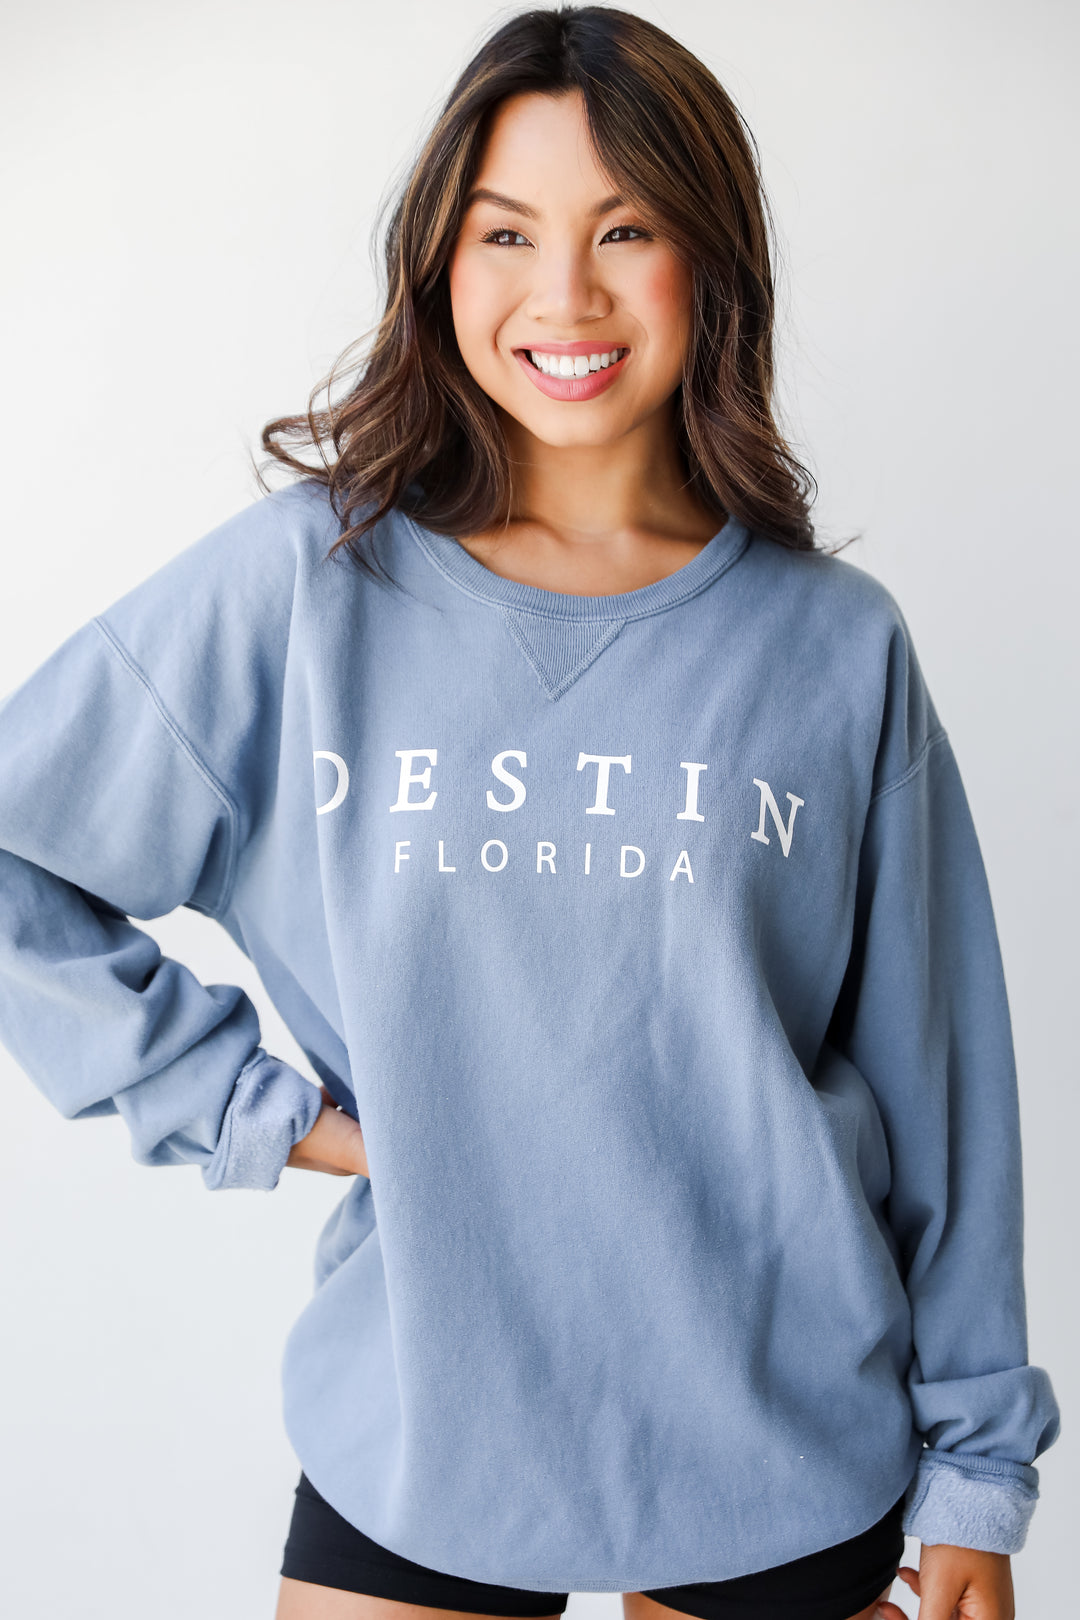 Blue Destin Florida Sweatshirt. Graphic Sweatshirt. Oversized Comfy Sweatshirt